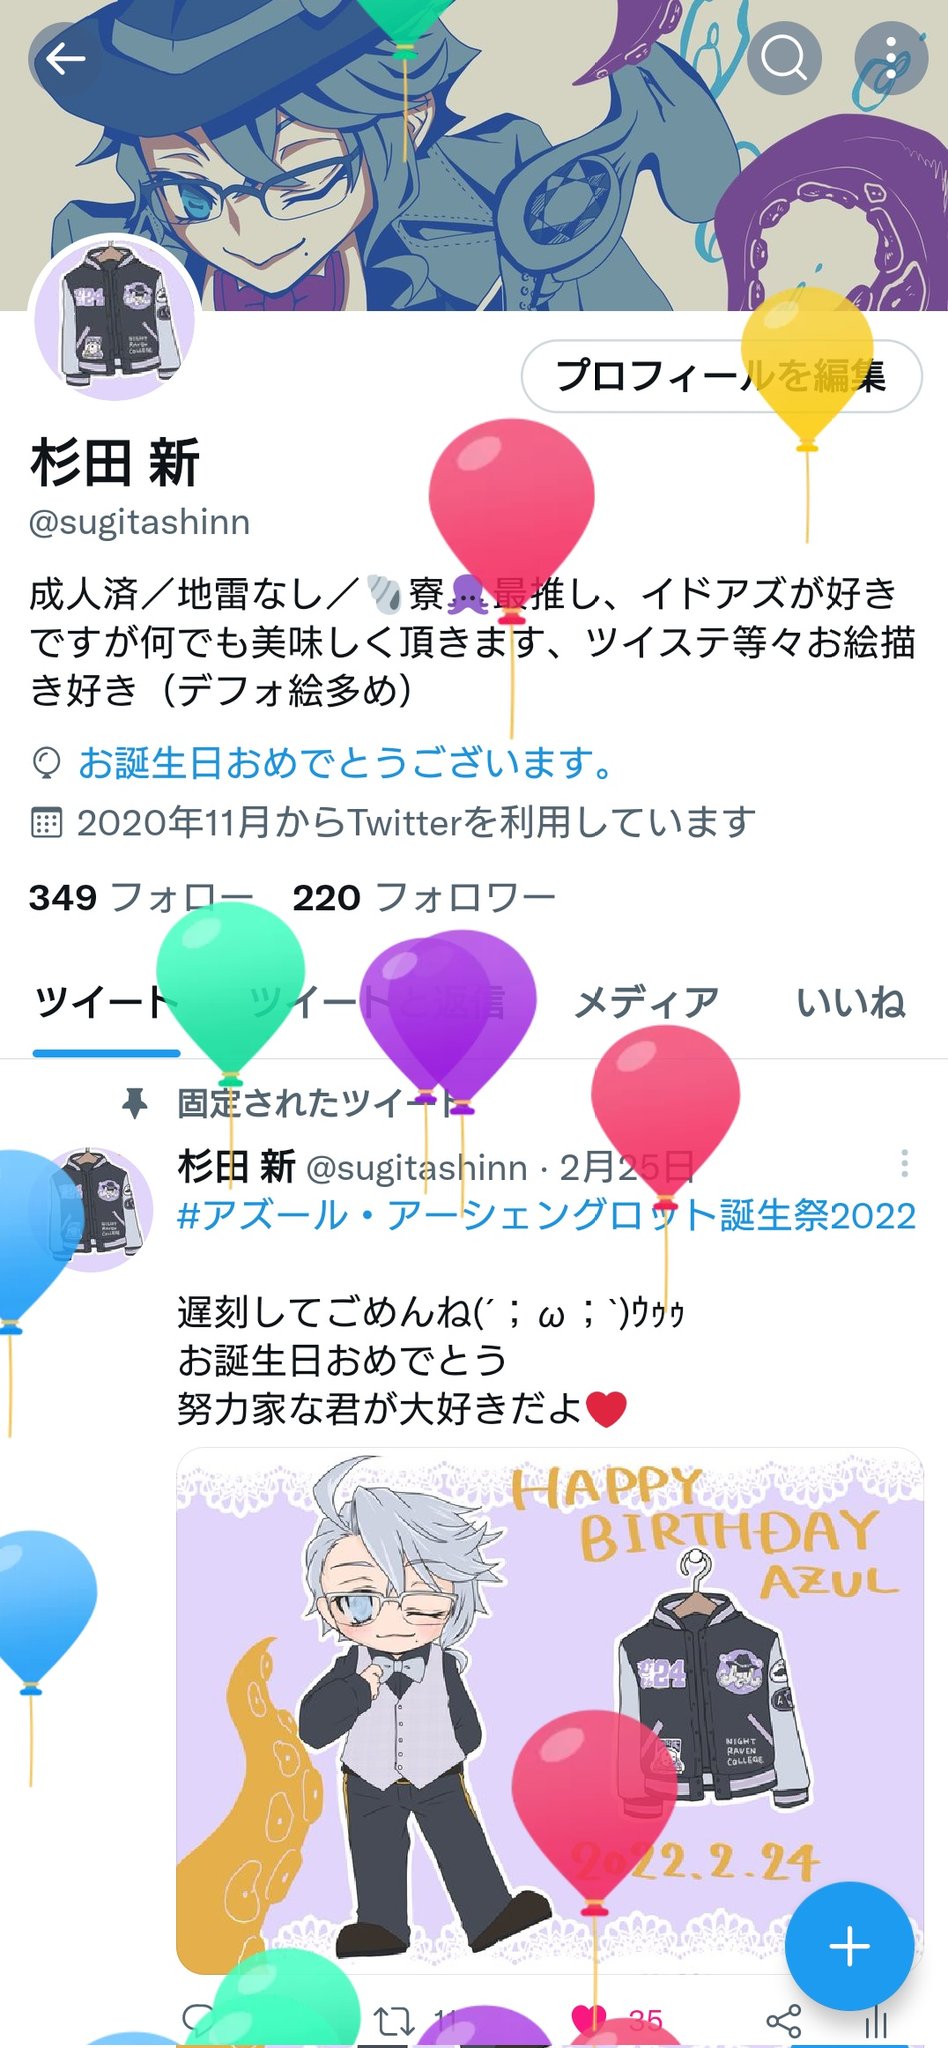 تويتر Hana على تويتر Sugitashinn お誕生日おめでとう 素敵な1年を過ごせますように